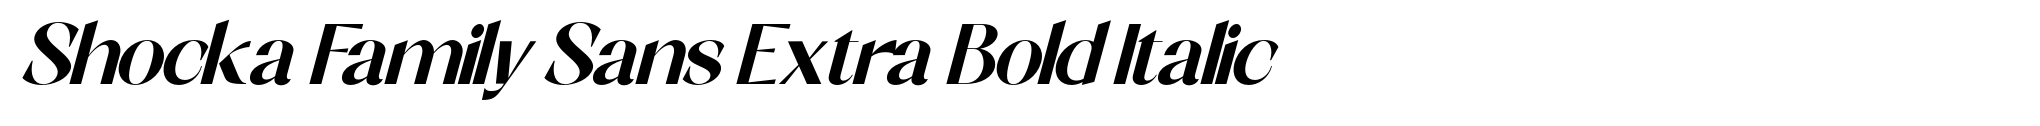 Shocka Family Sans Extra Bold Italic image